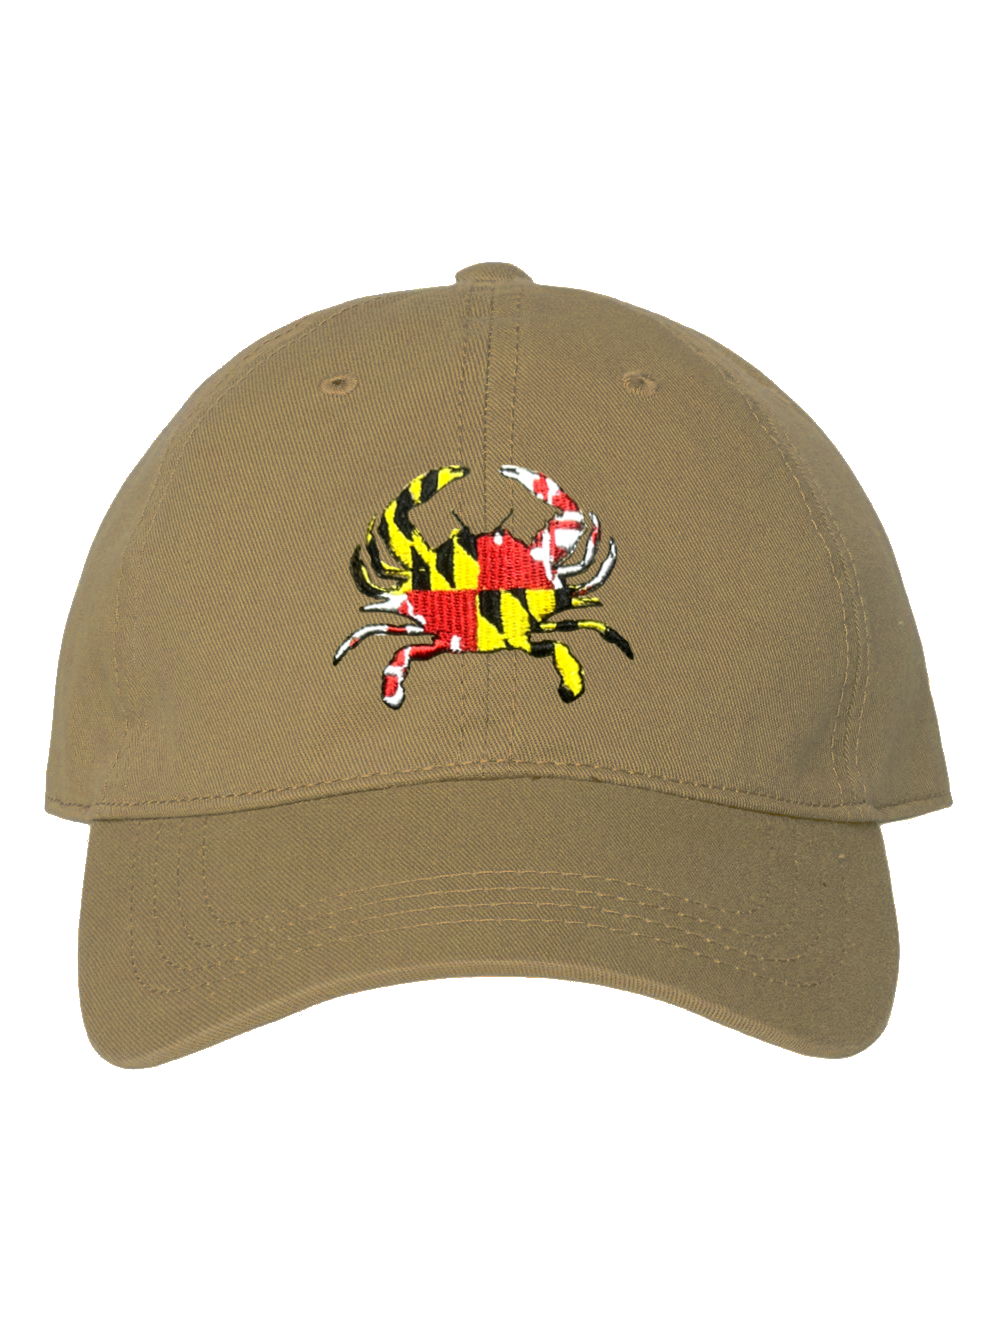 Maryland Crab Embroidered Baseball Cap (Brown)